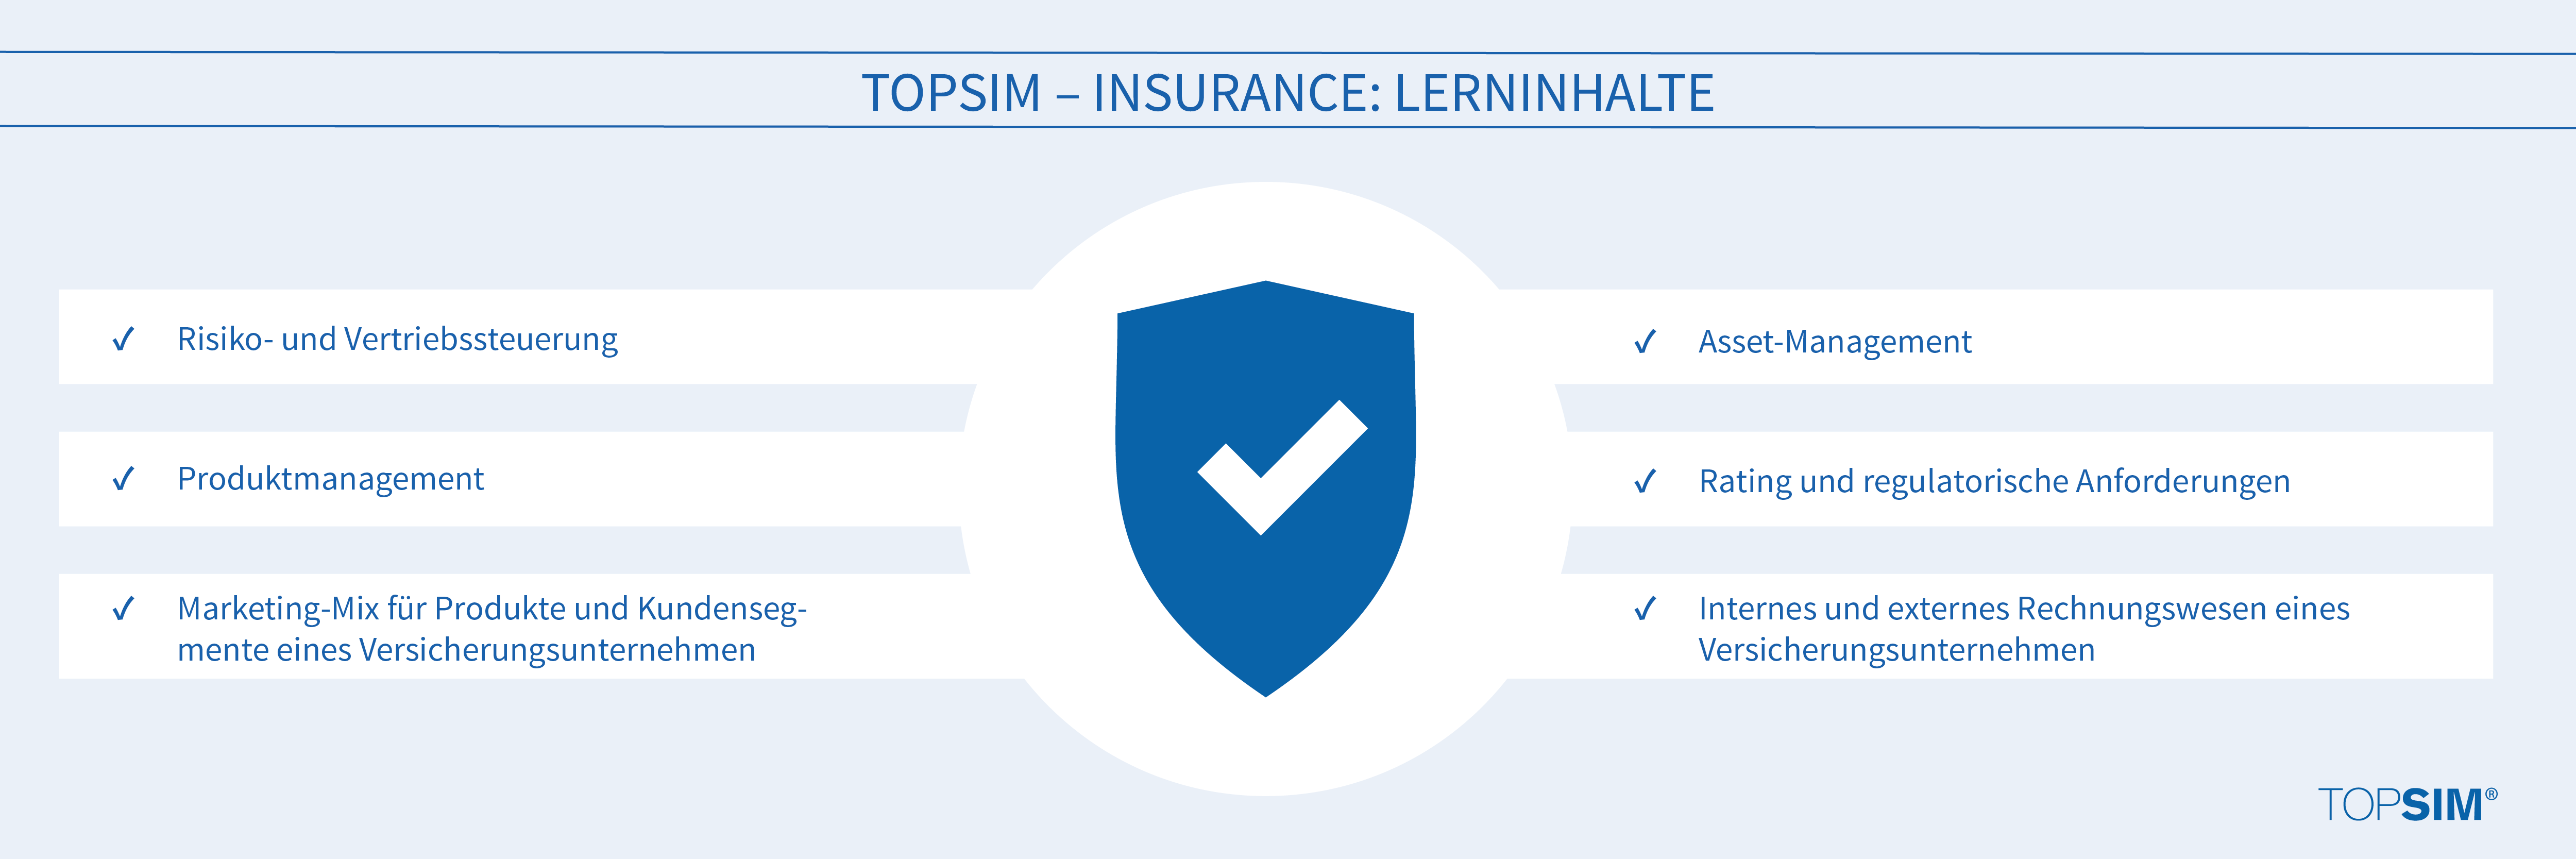 Lerninhalte TOPSIM – Insurance